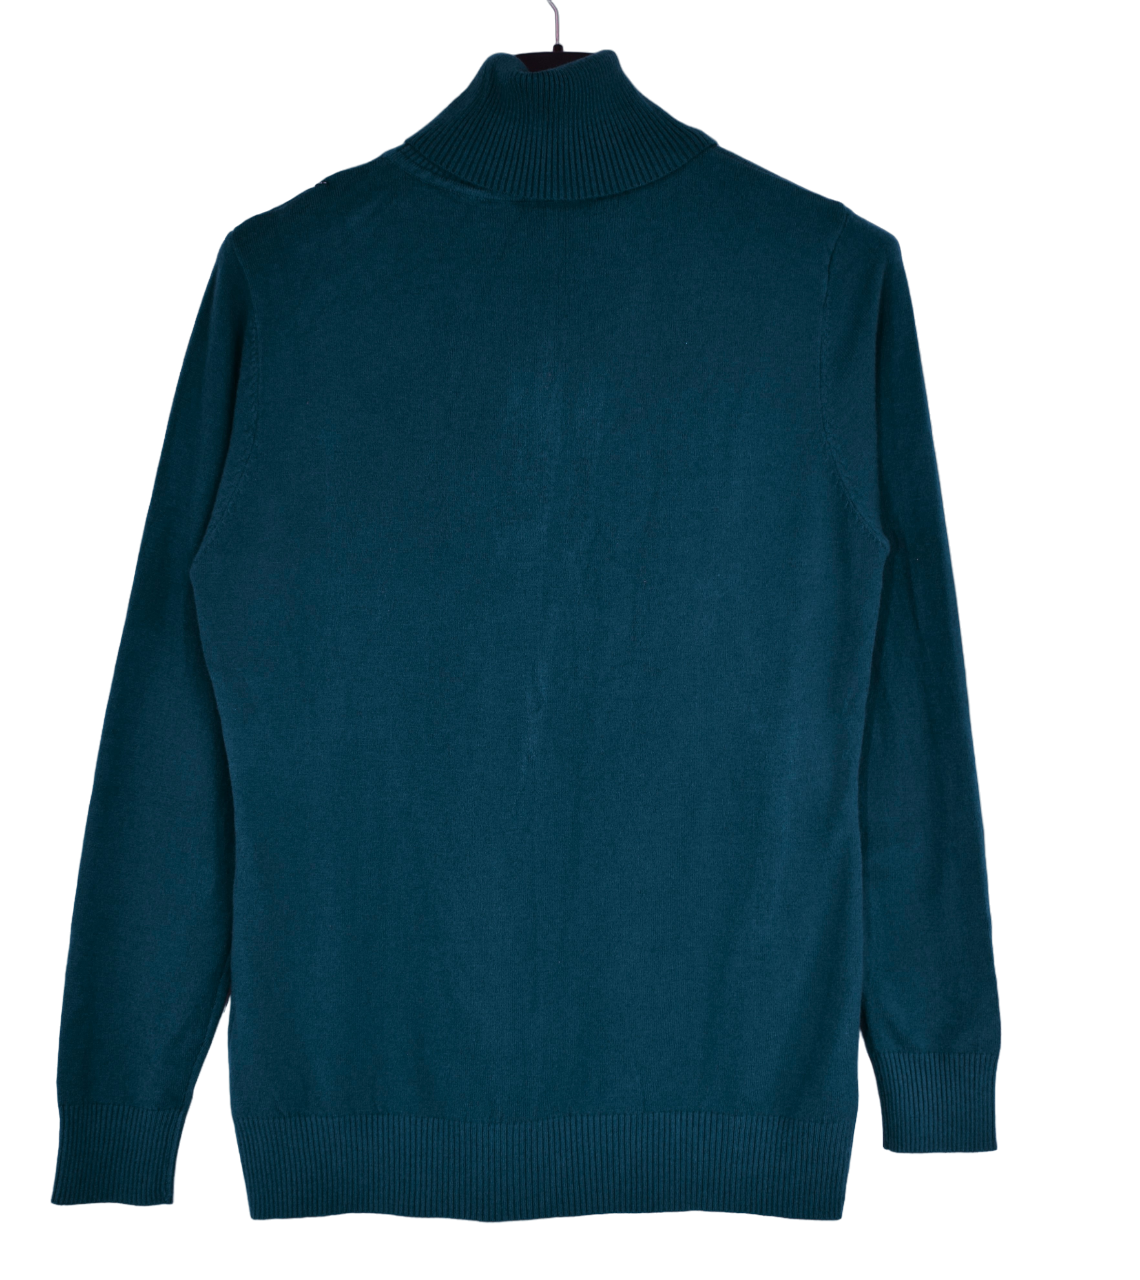 Ladies Italian Lagenlook Basic Polo Neck Lightweight Sweater Jumper Top